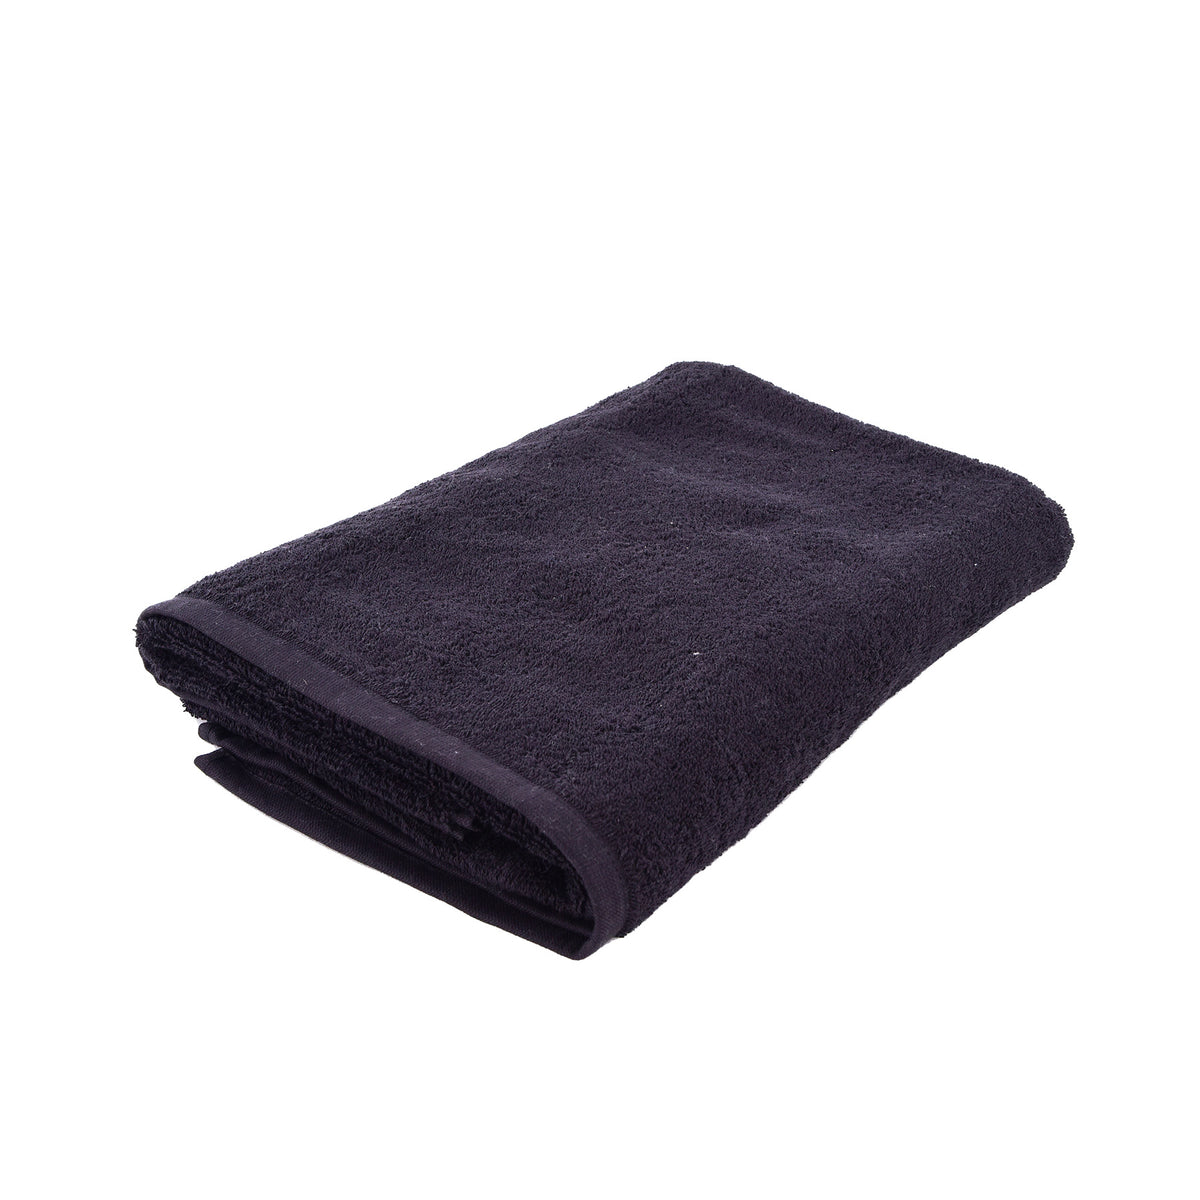 Bath Towel - BlackSize: 70x140cm.